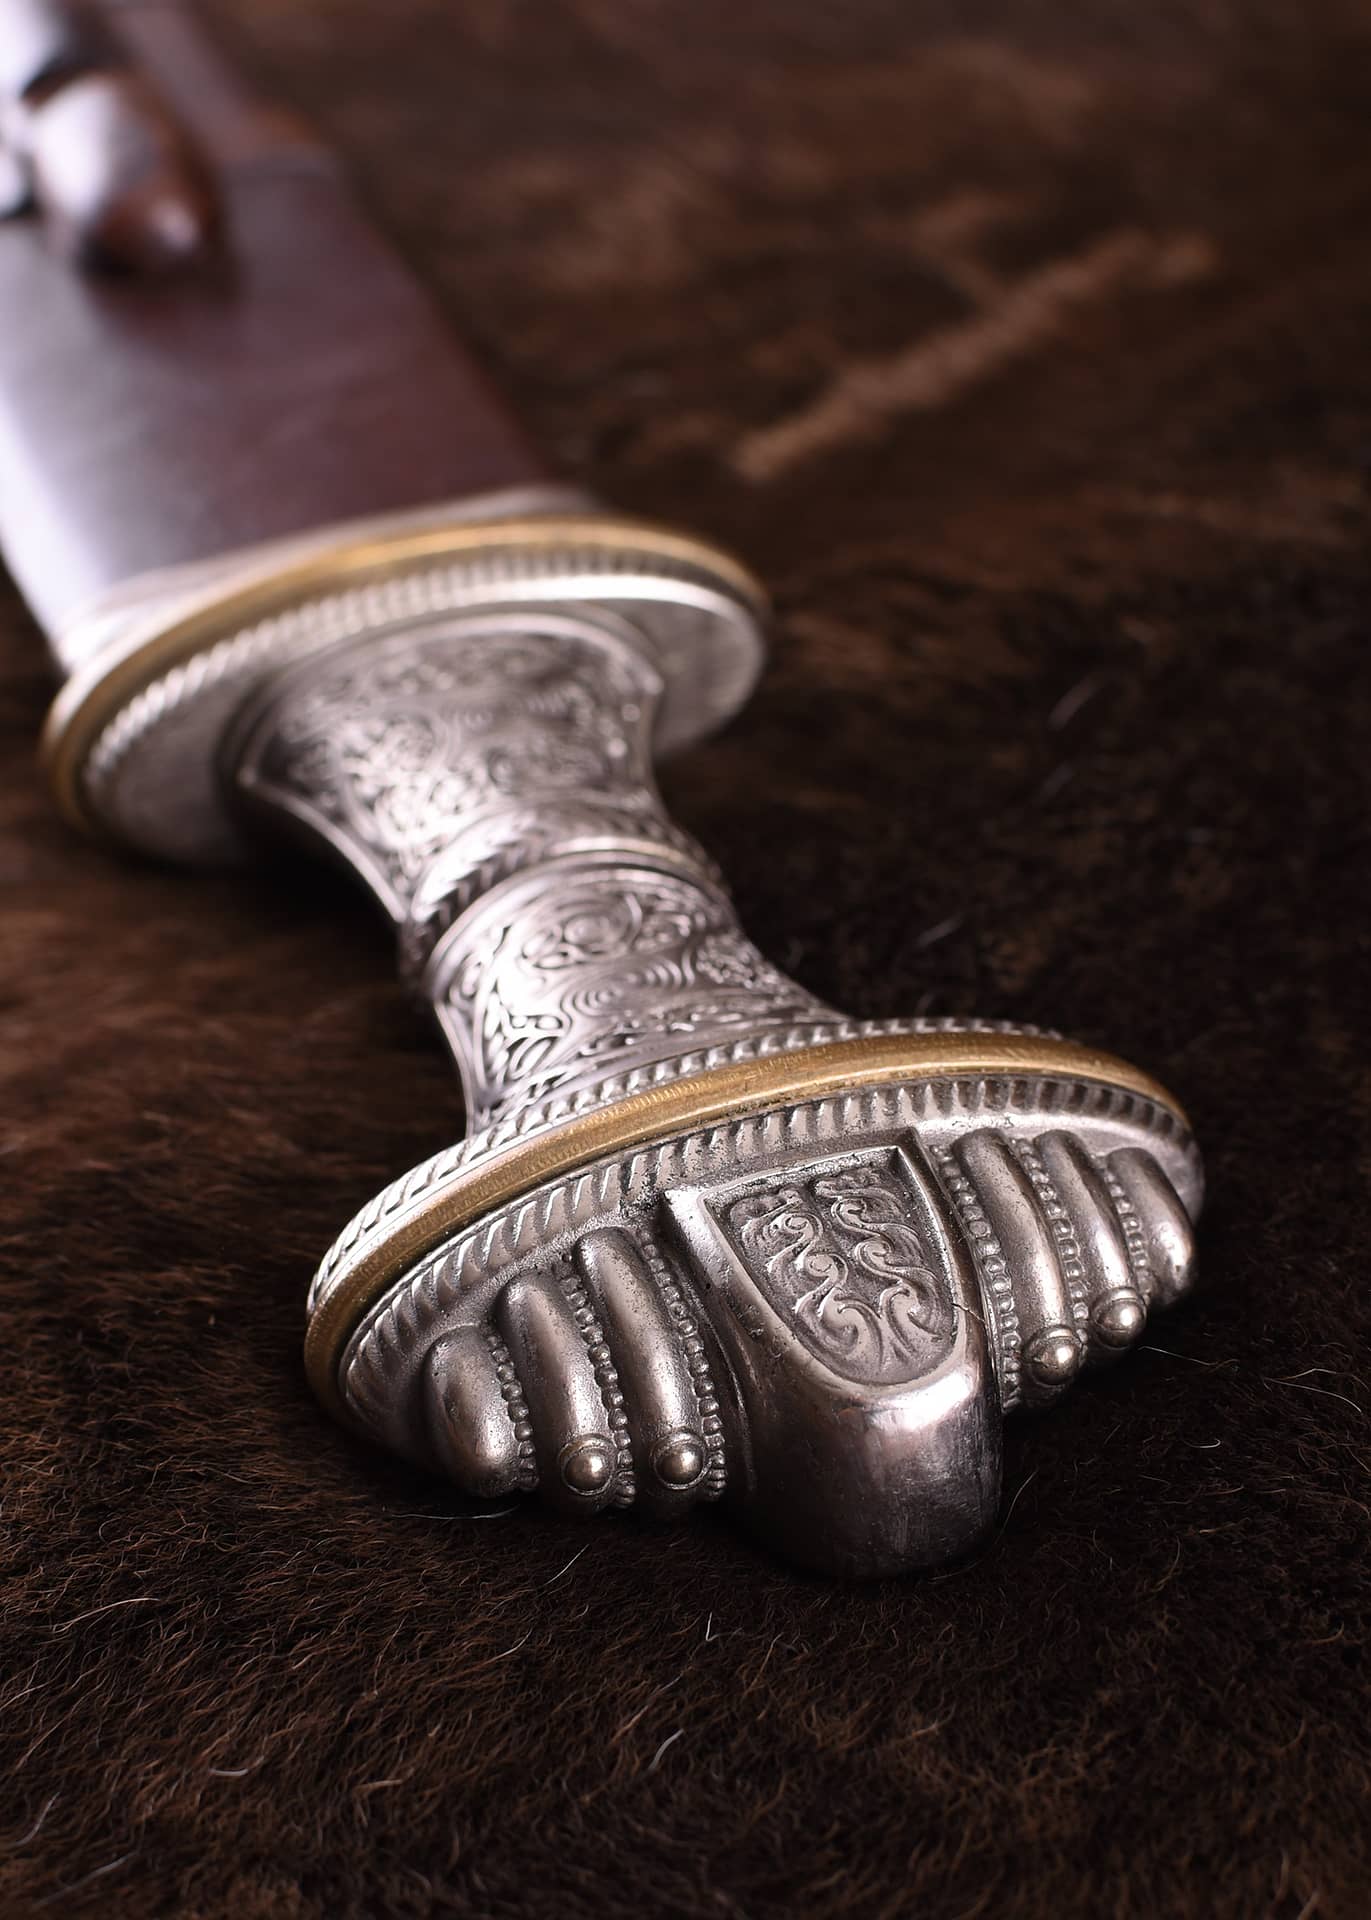 Espada anglosajona Fetter Lane, siglo VIII 0116041300 - Espadas y Más